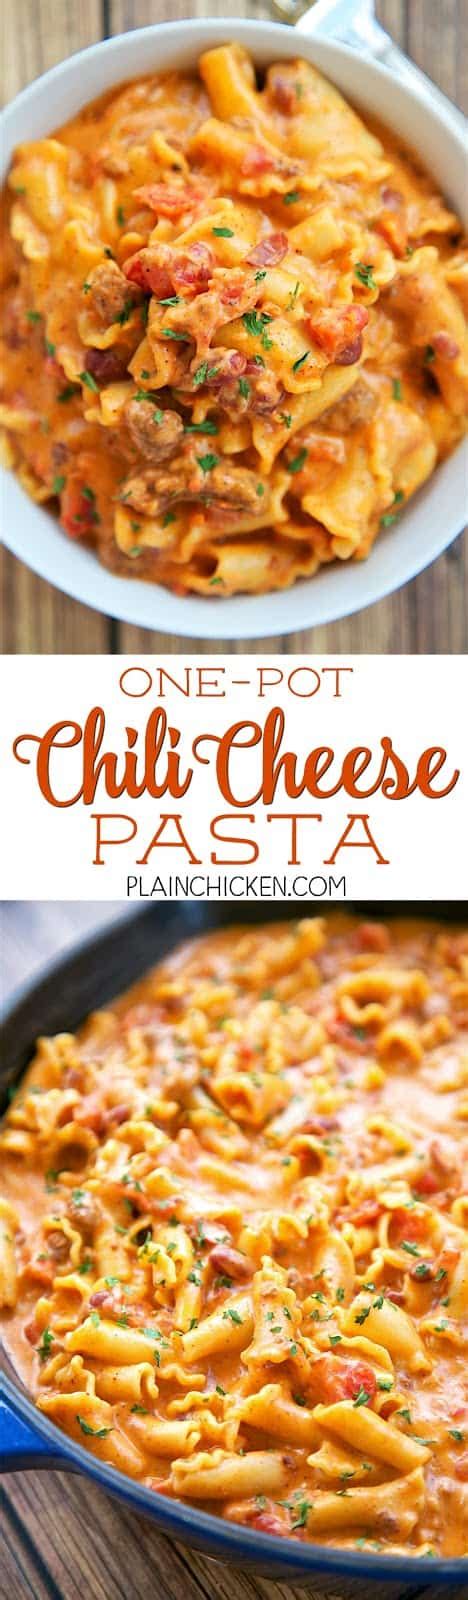 pot chili cheese pasta plain chicken